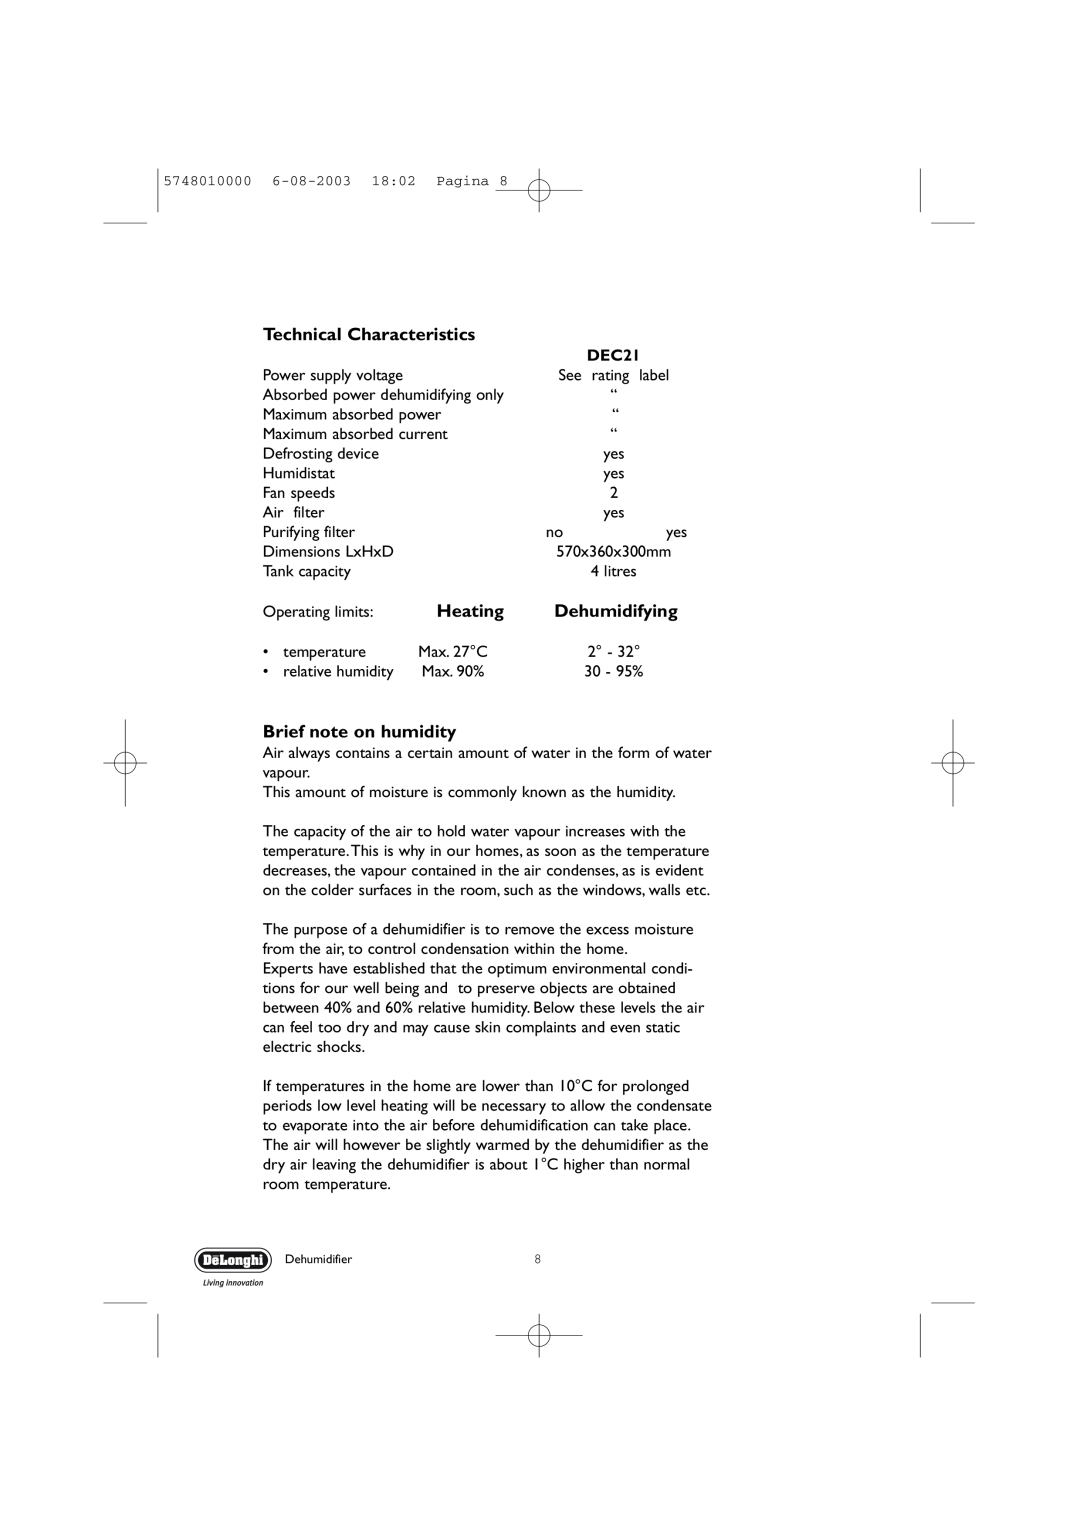 DeLonghi DEC 21 manual Technical Characteristics, Heating, Brief note on humidity, DEC21, Dehumidifying 